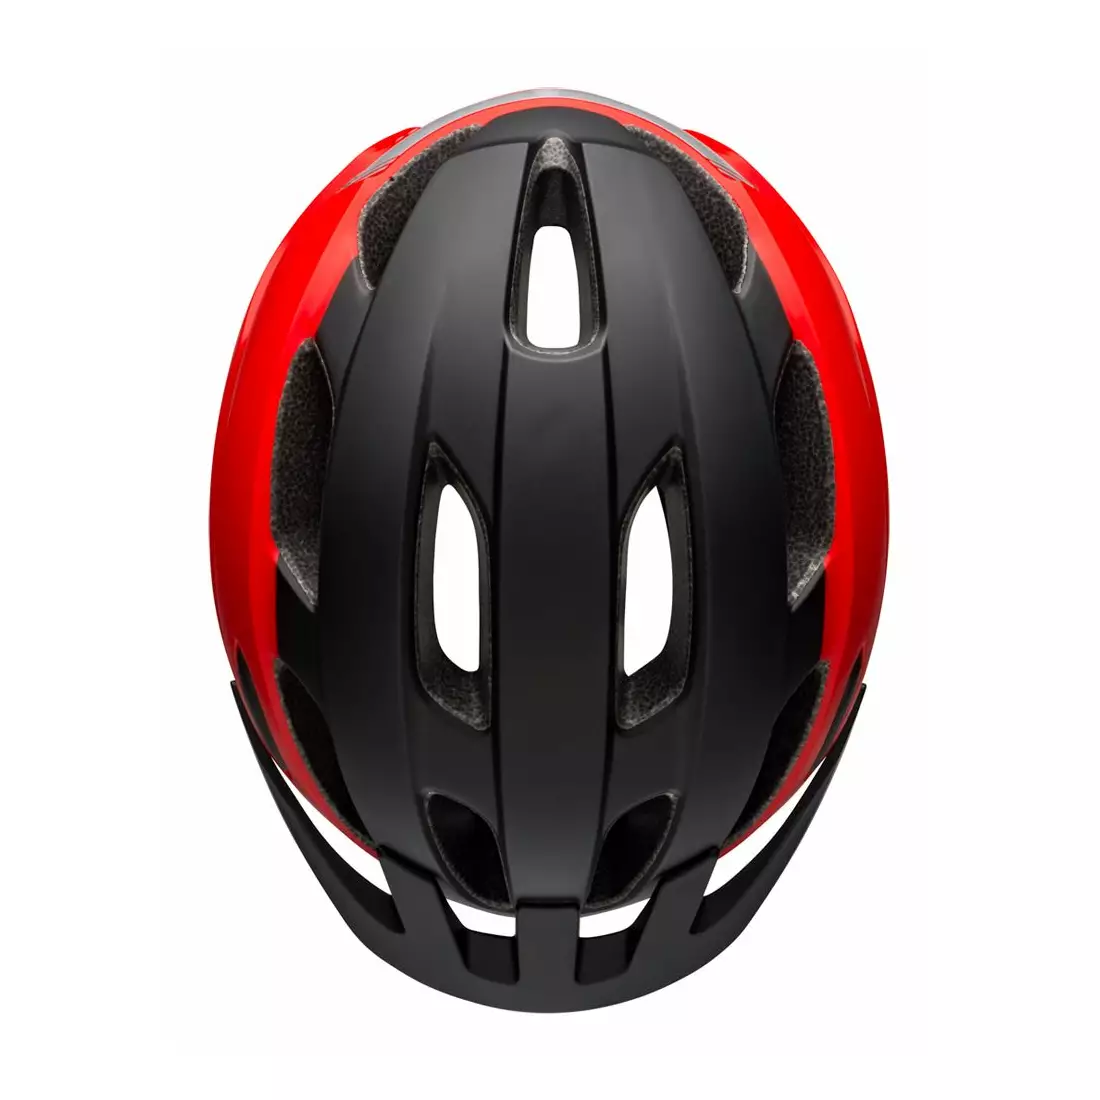 BELL TRACE MTB bicycle helmet, matte red black